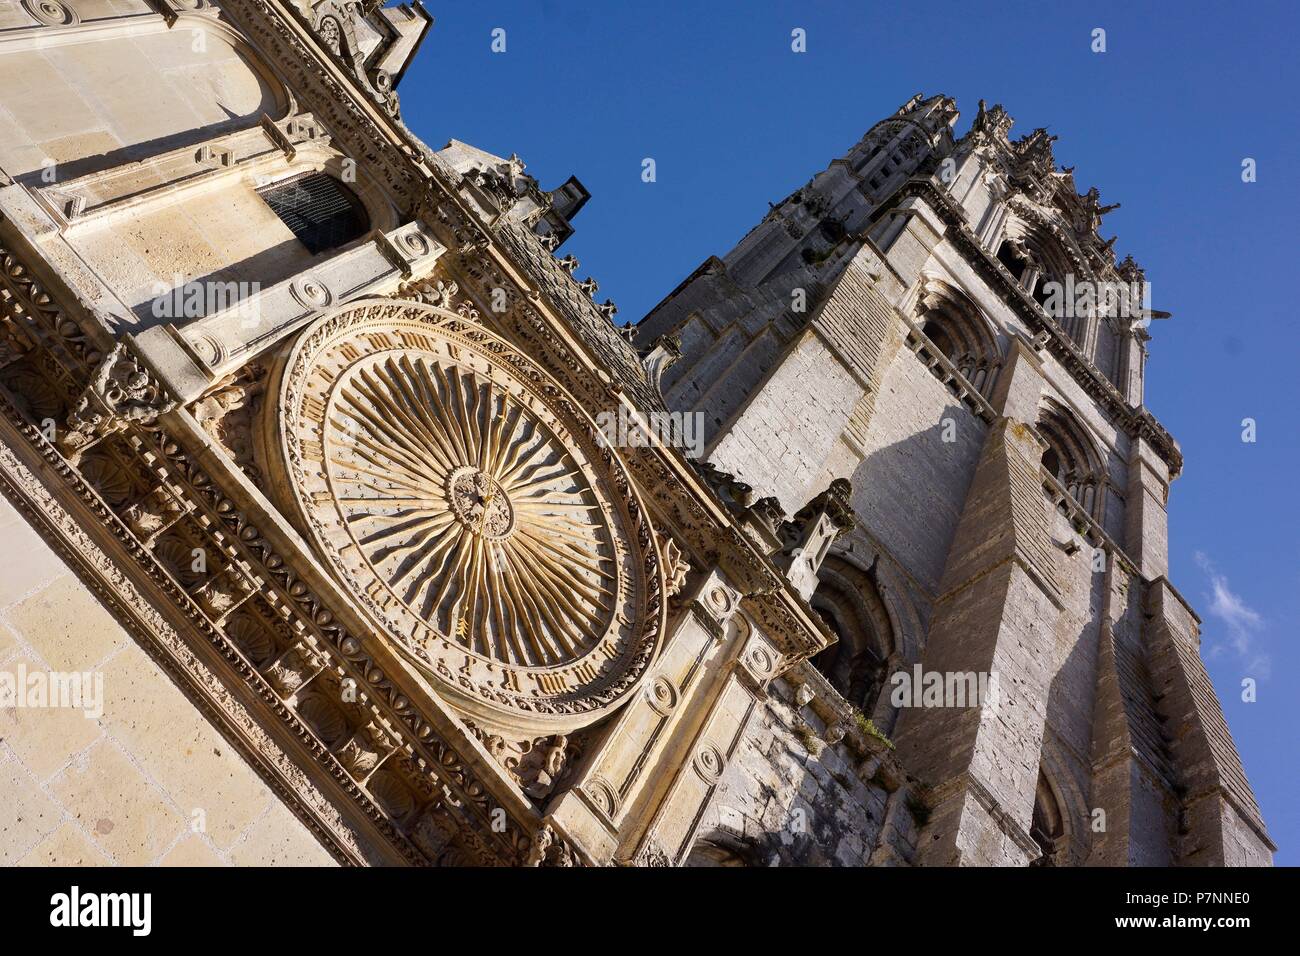 RELOJ EXTERIOR DE LA CATEDRAL DE NOTRE-DAME (Nuestra Señora de Chartres) Chartres, Francia. Foto Stock